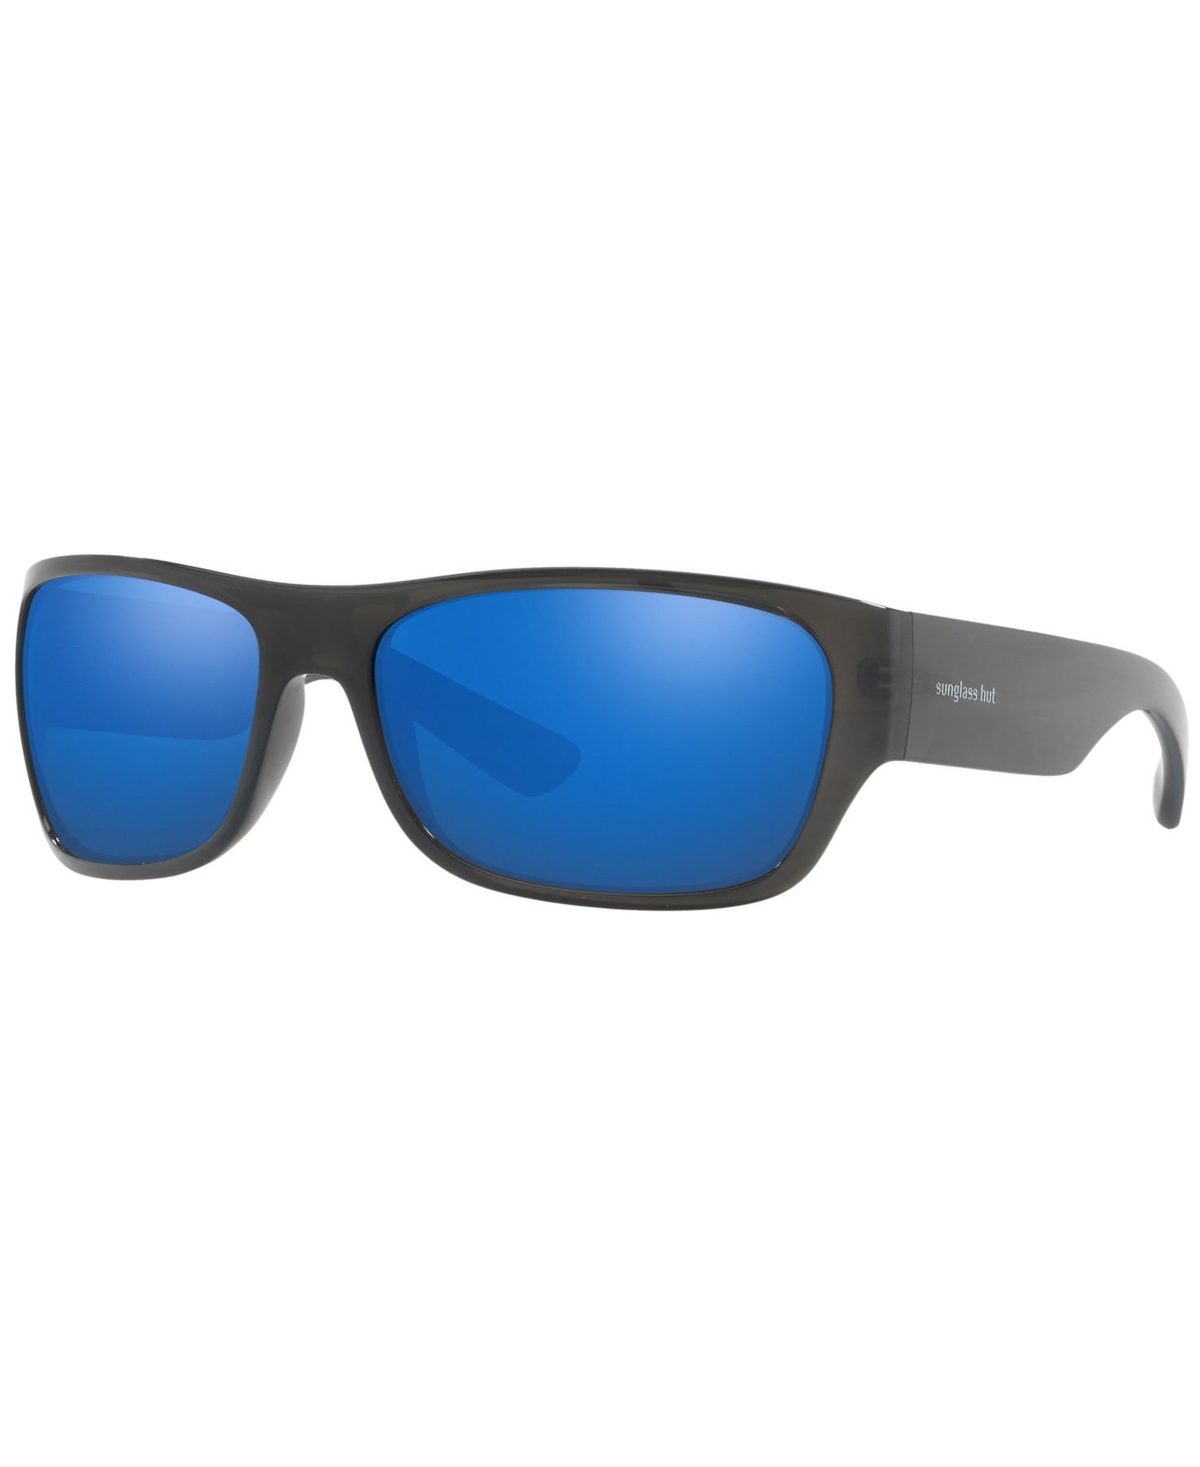 Sunglass Hut Collection Sunglasses, Hu2013 63 In Dark Grey,blue Mirror Blue